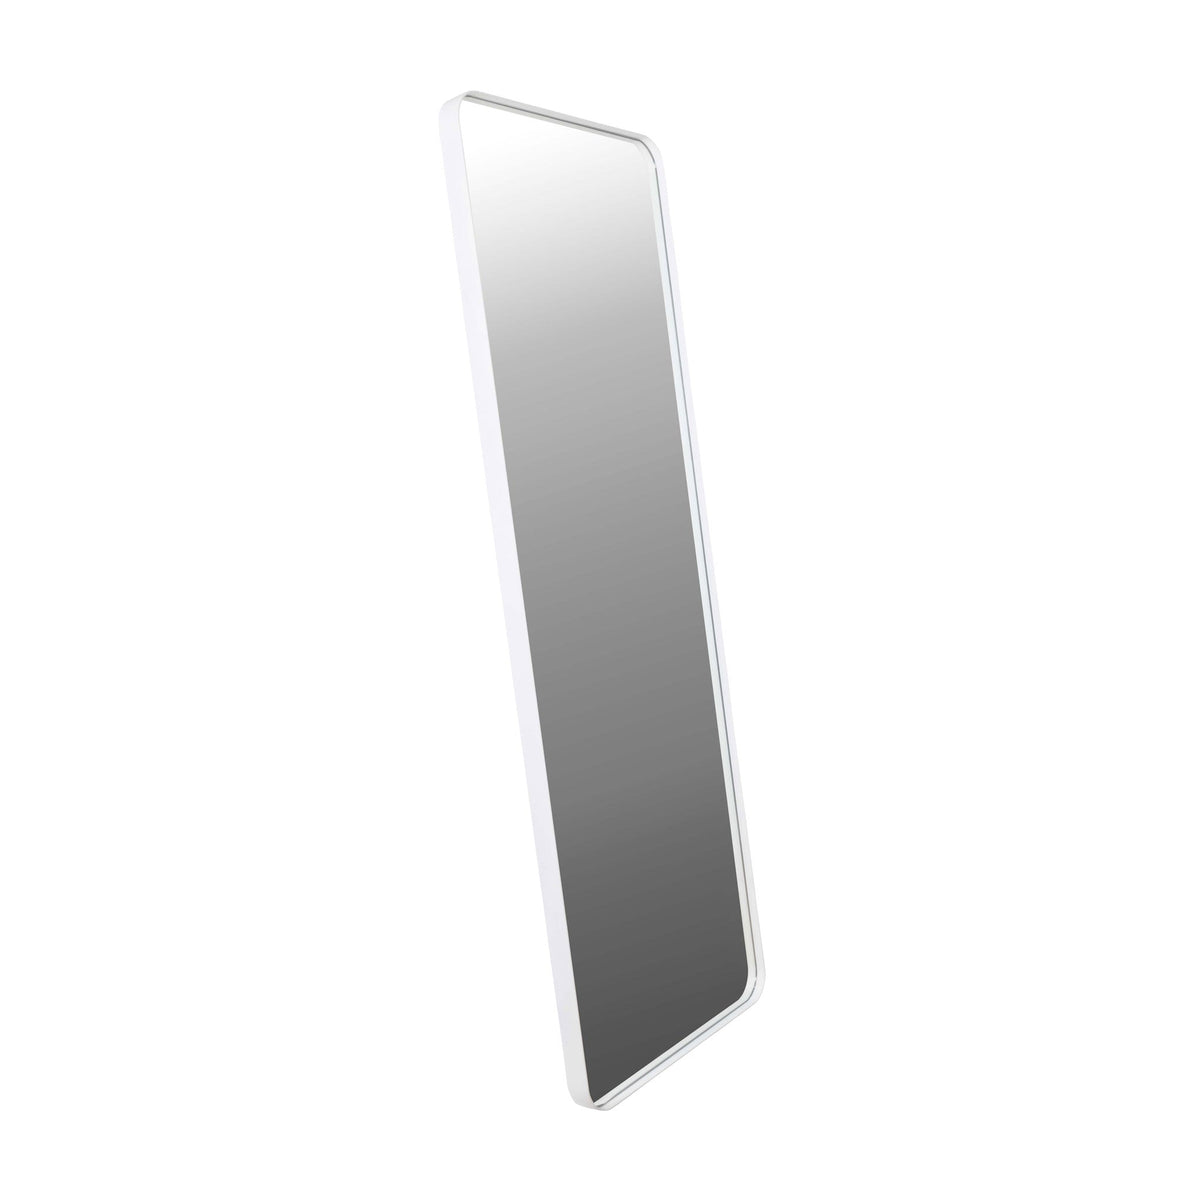 Sienna Radius Corners White Metal Mirror - 500x750mm